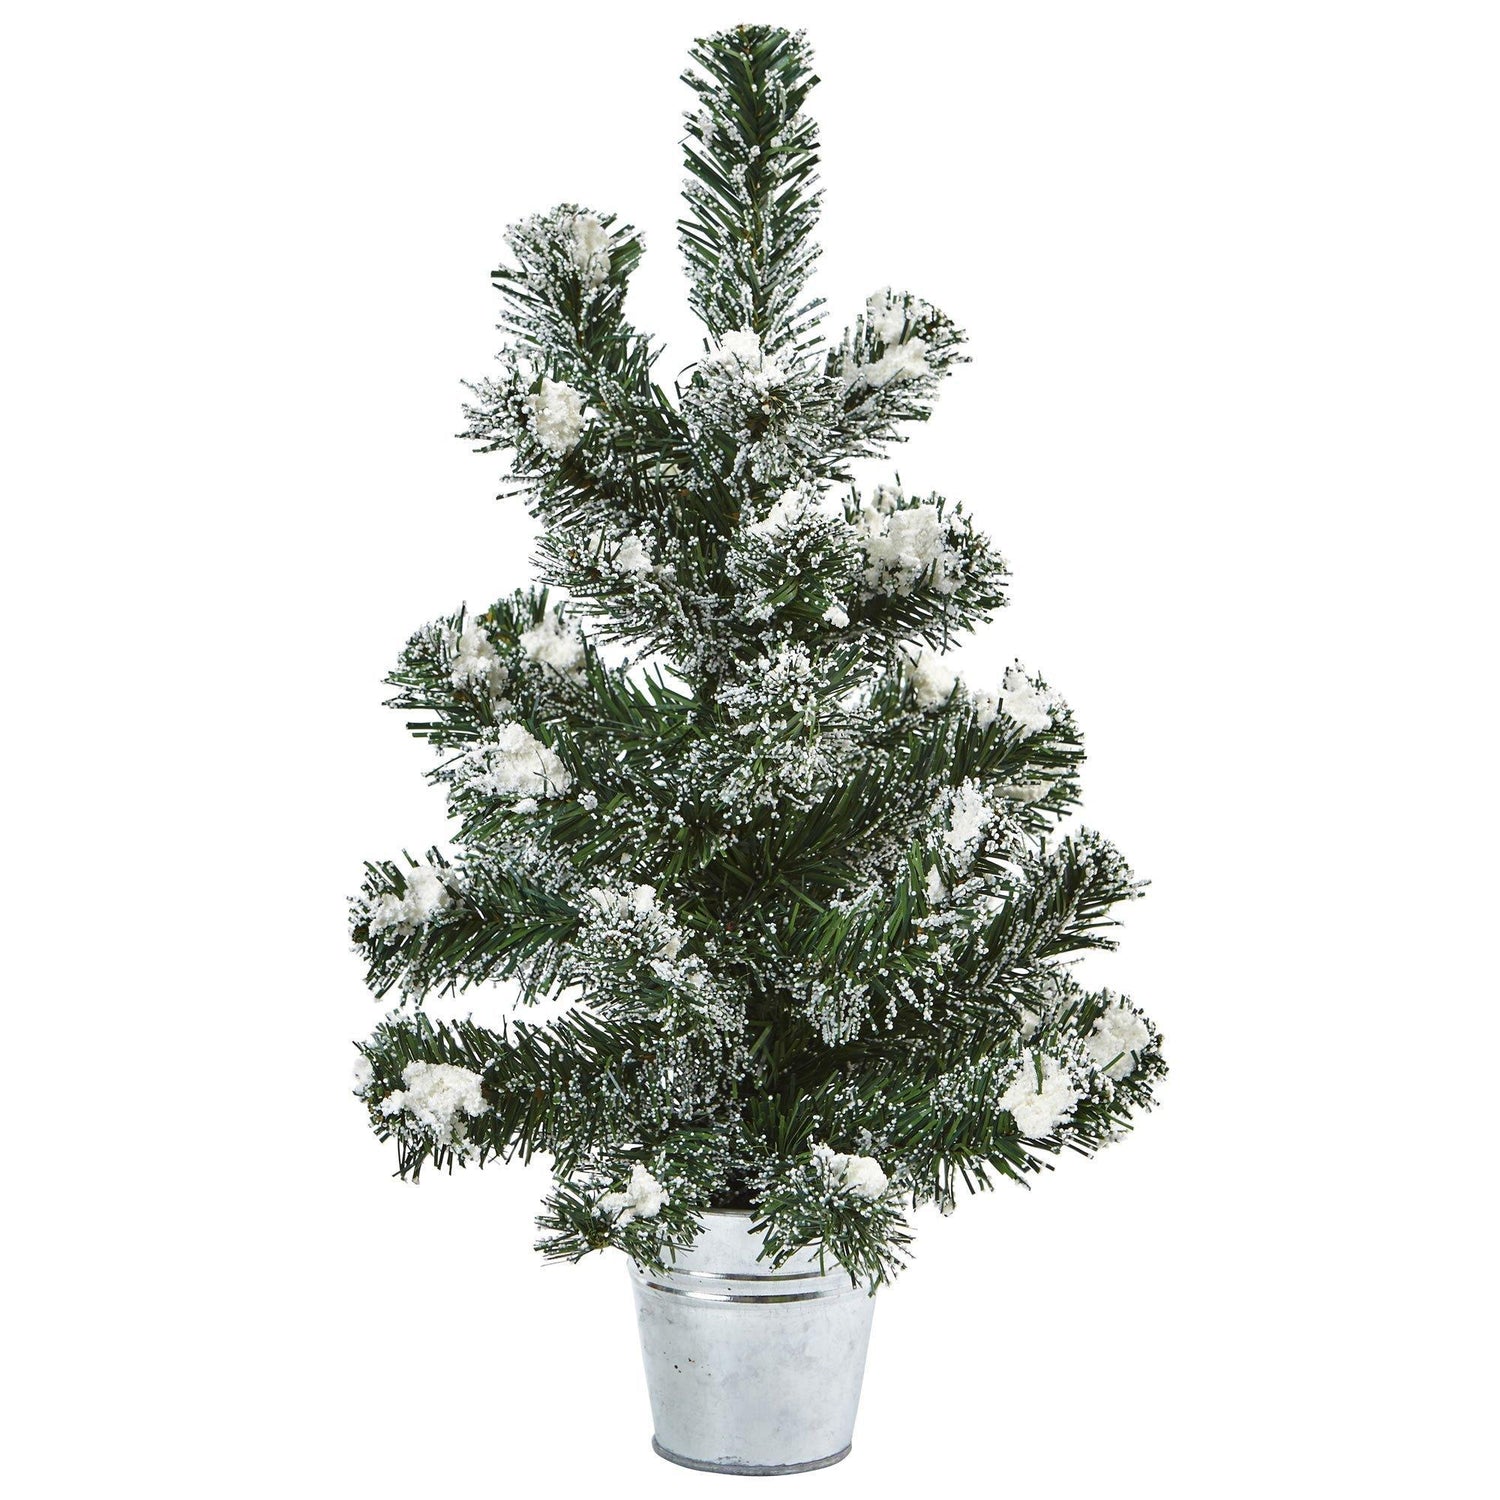 Snowy Pine Christmas Tree with Tin (Set of 2)